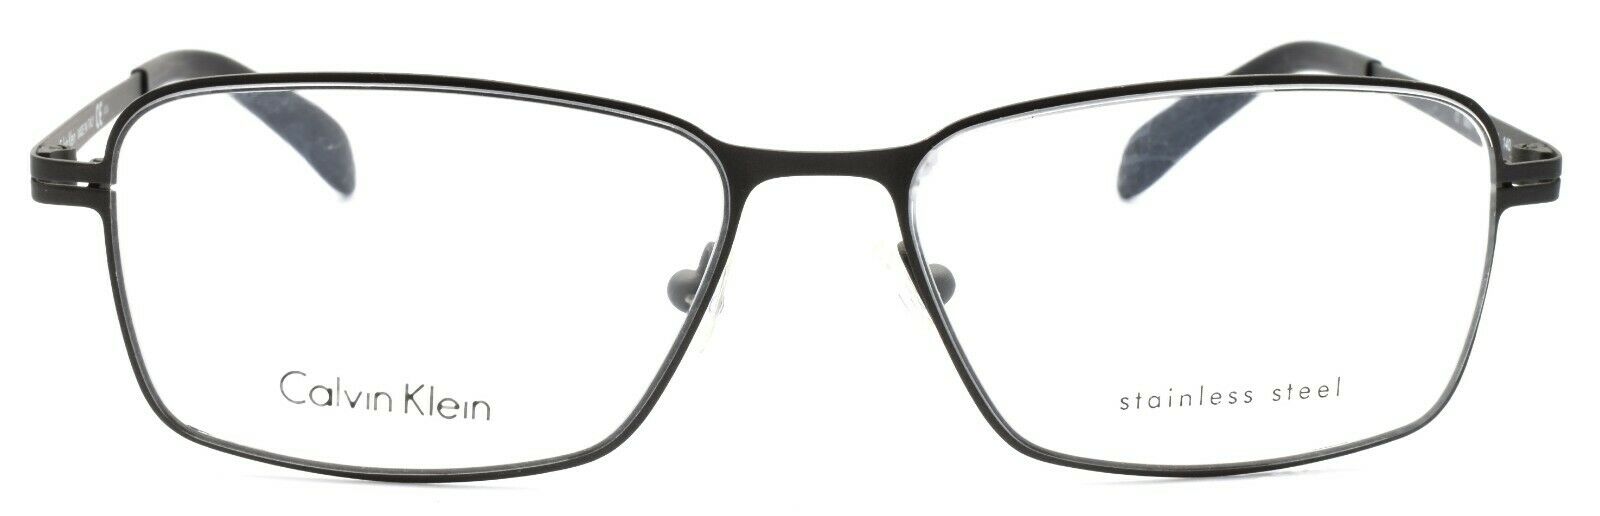 2-Calvin Klein CK5401 060 Men's Eyeglasses Frames 55-16-140 Gunmetal ITALY-0750779068045-IKSpecs